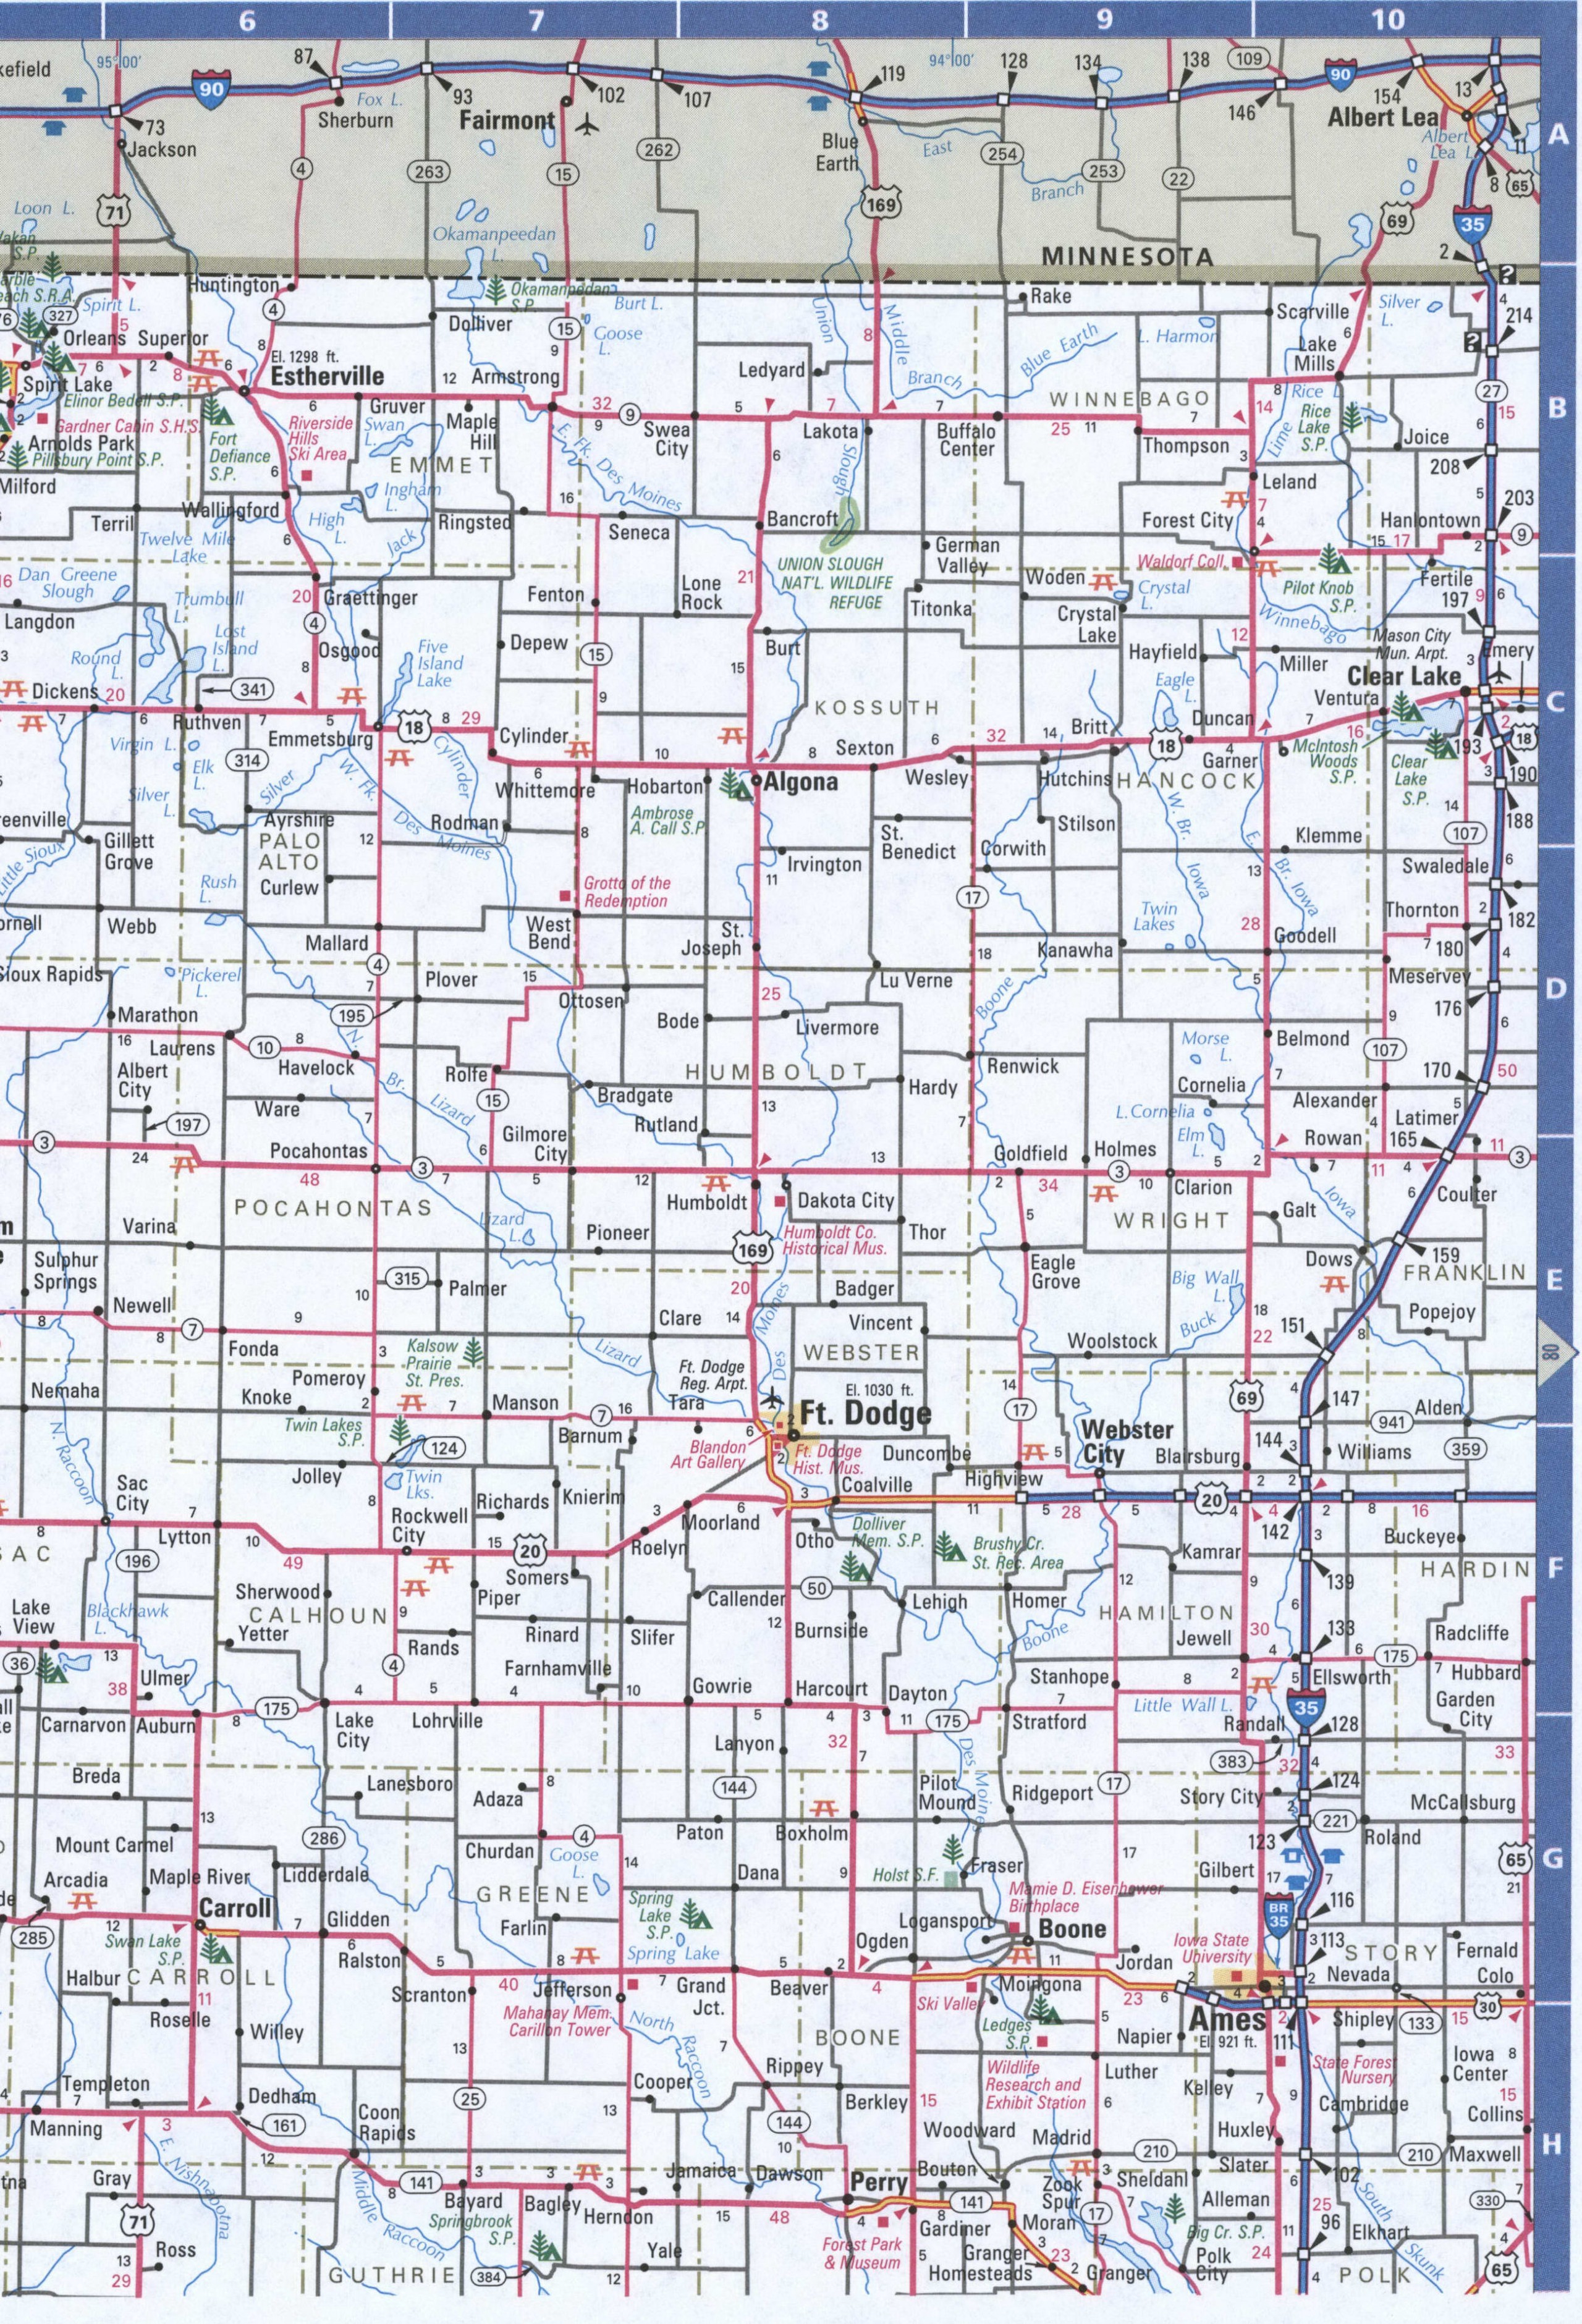 NorthEast Iowa map